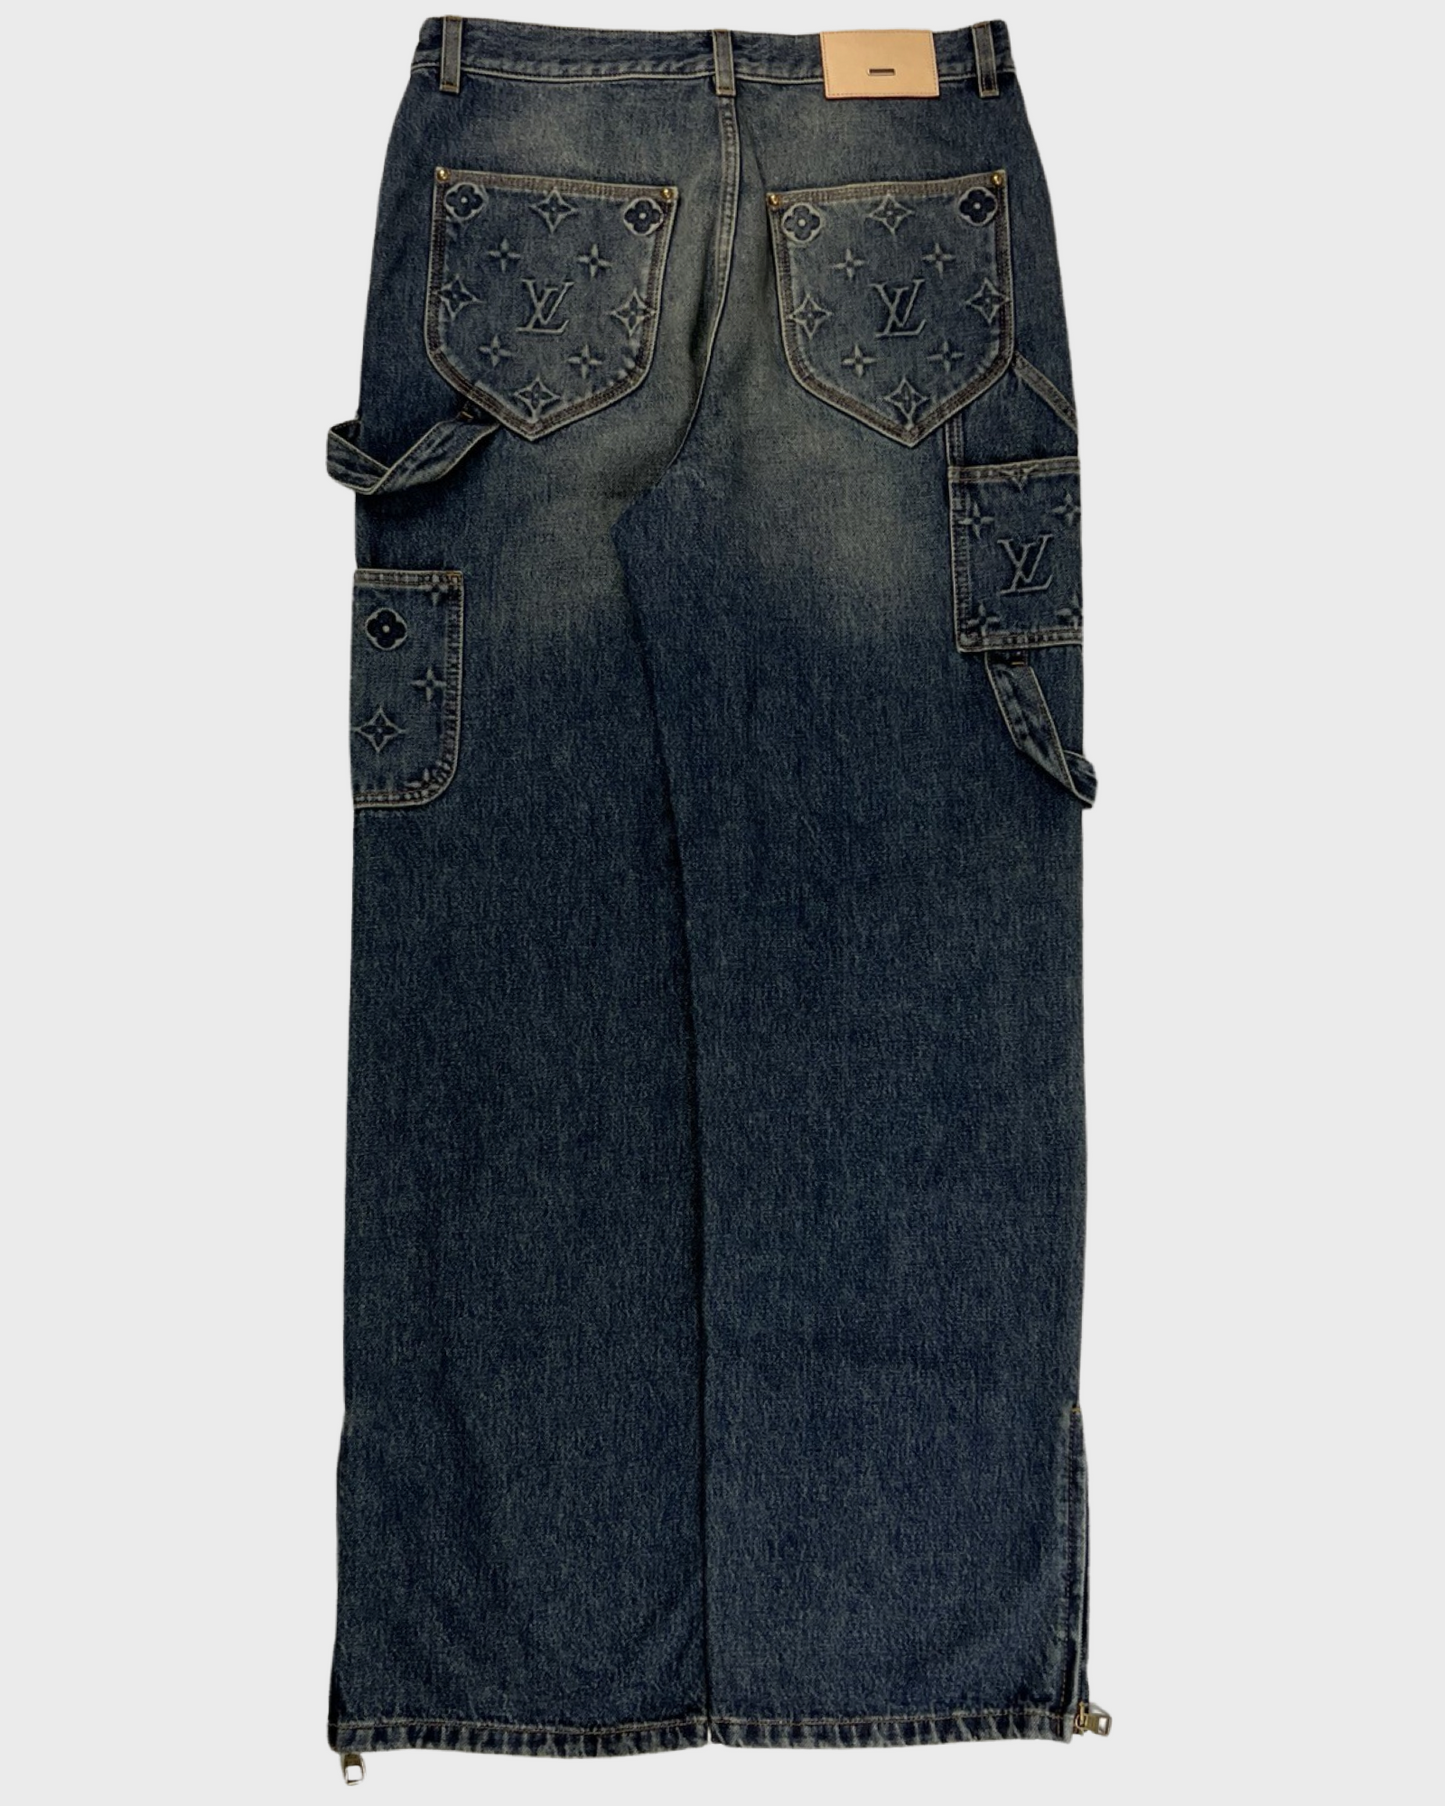 Louis Vuitton AW23 denim carpenter pants in indigo blue SZ:W31